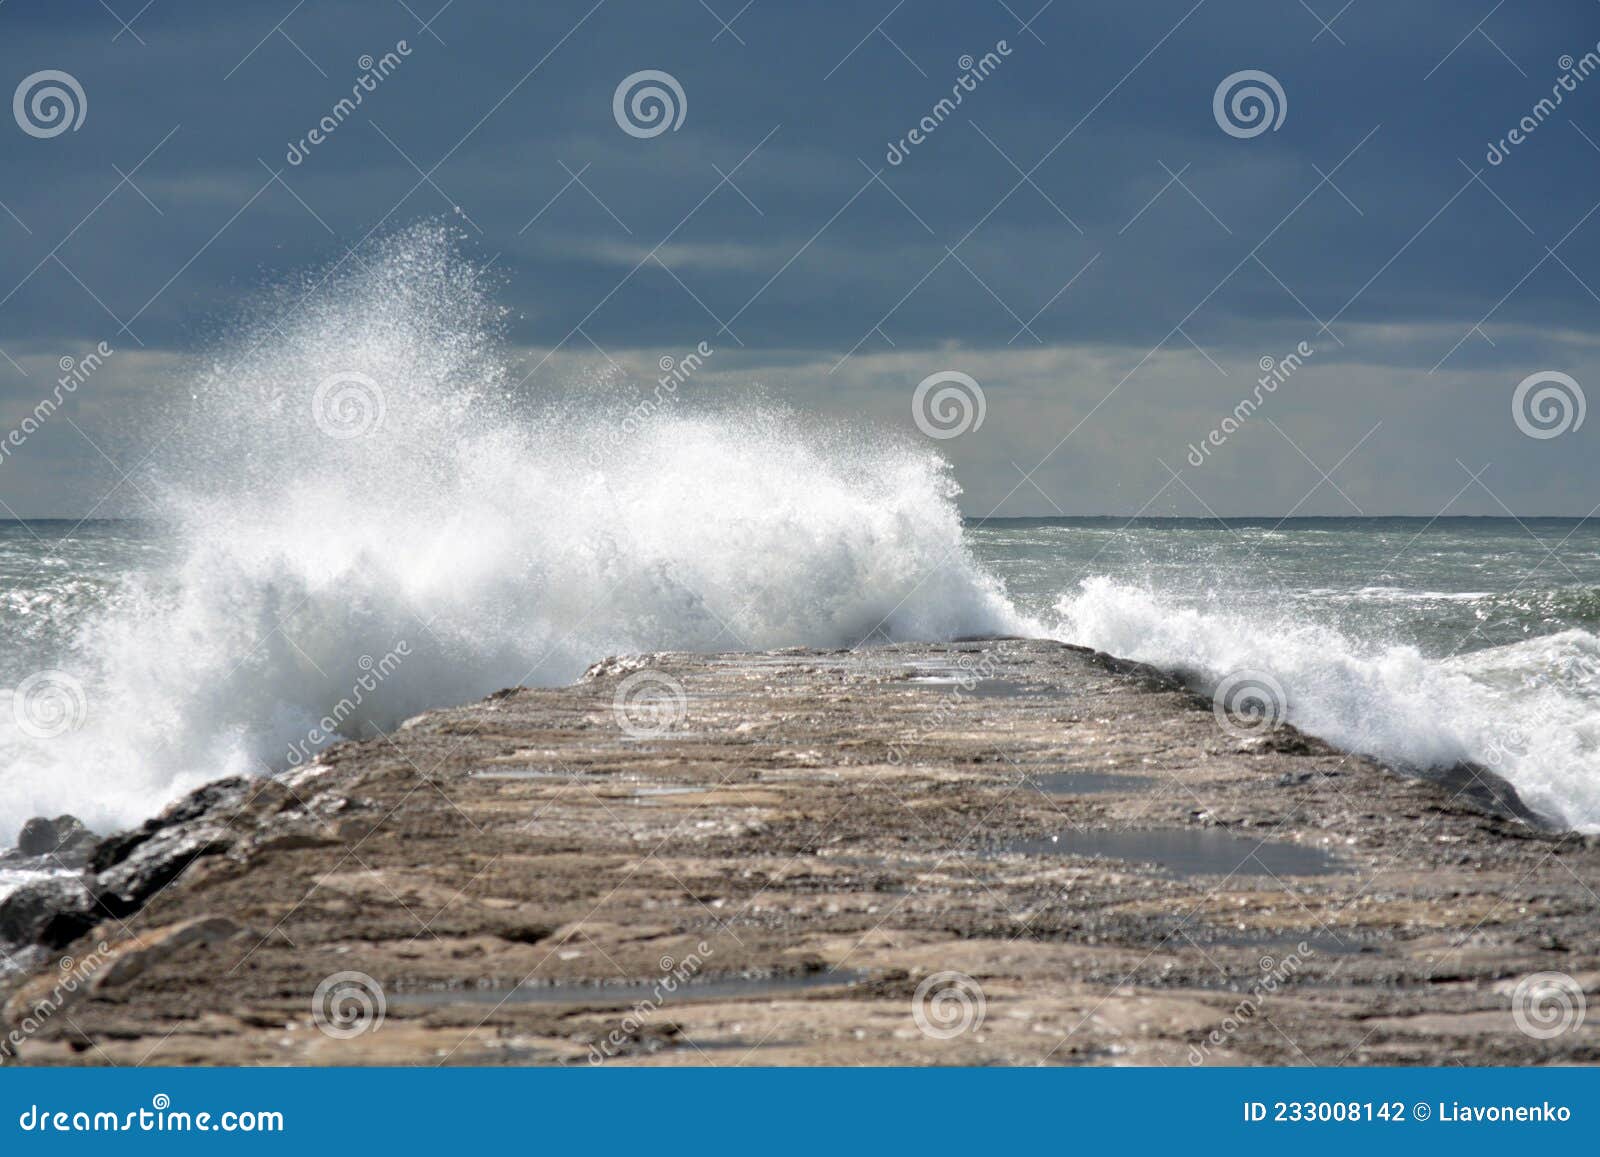 waves in the atlantic ocean beach. portugal almada. costa de caparica.